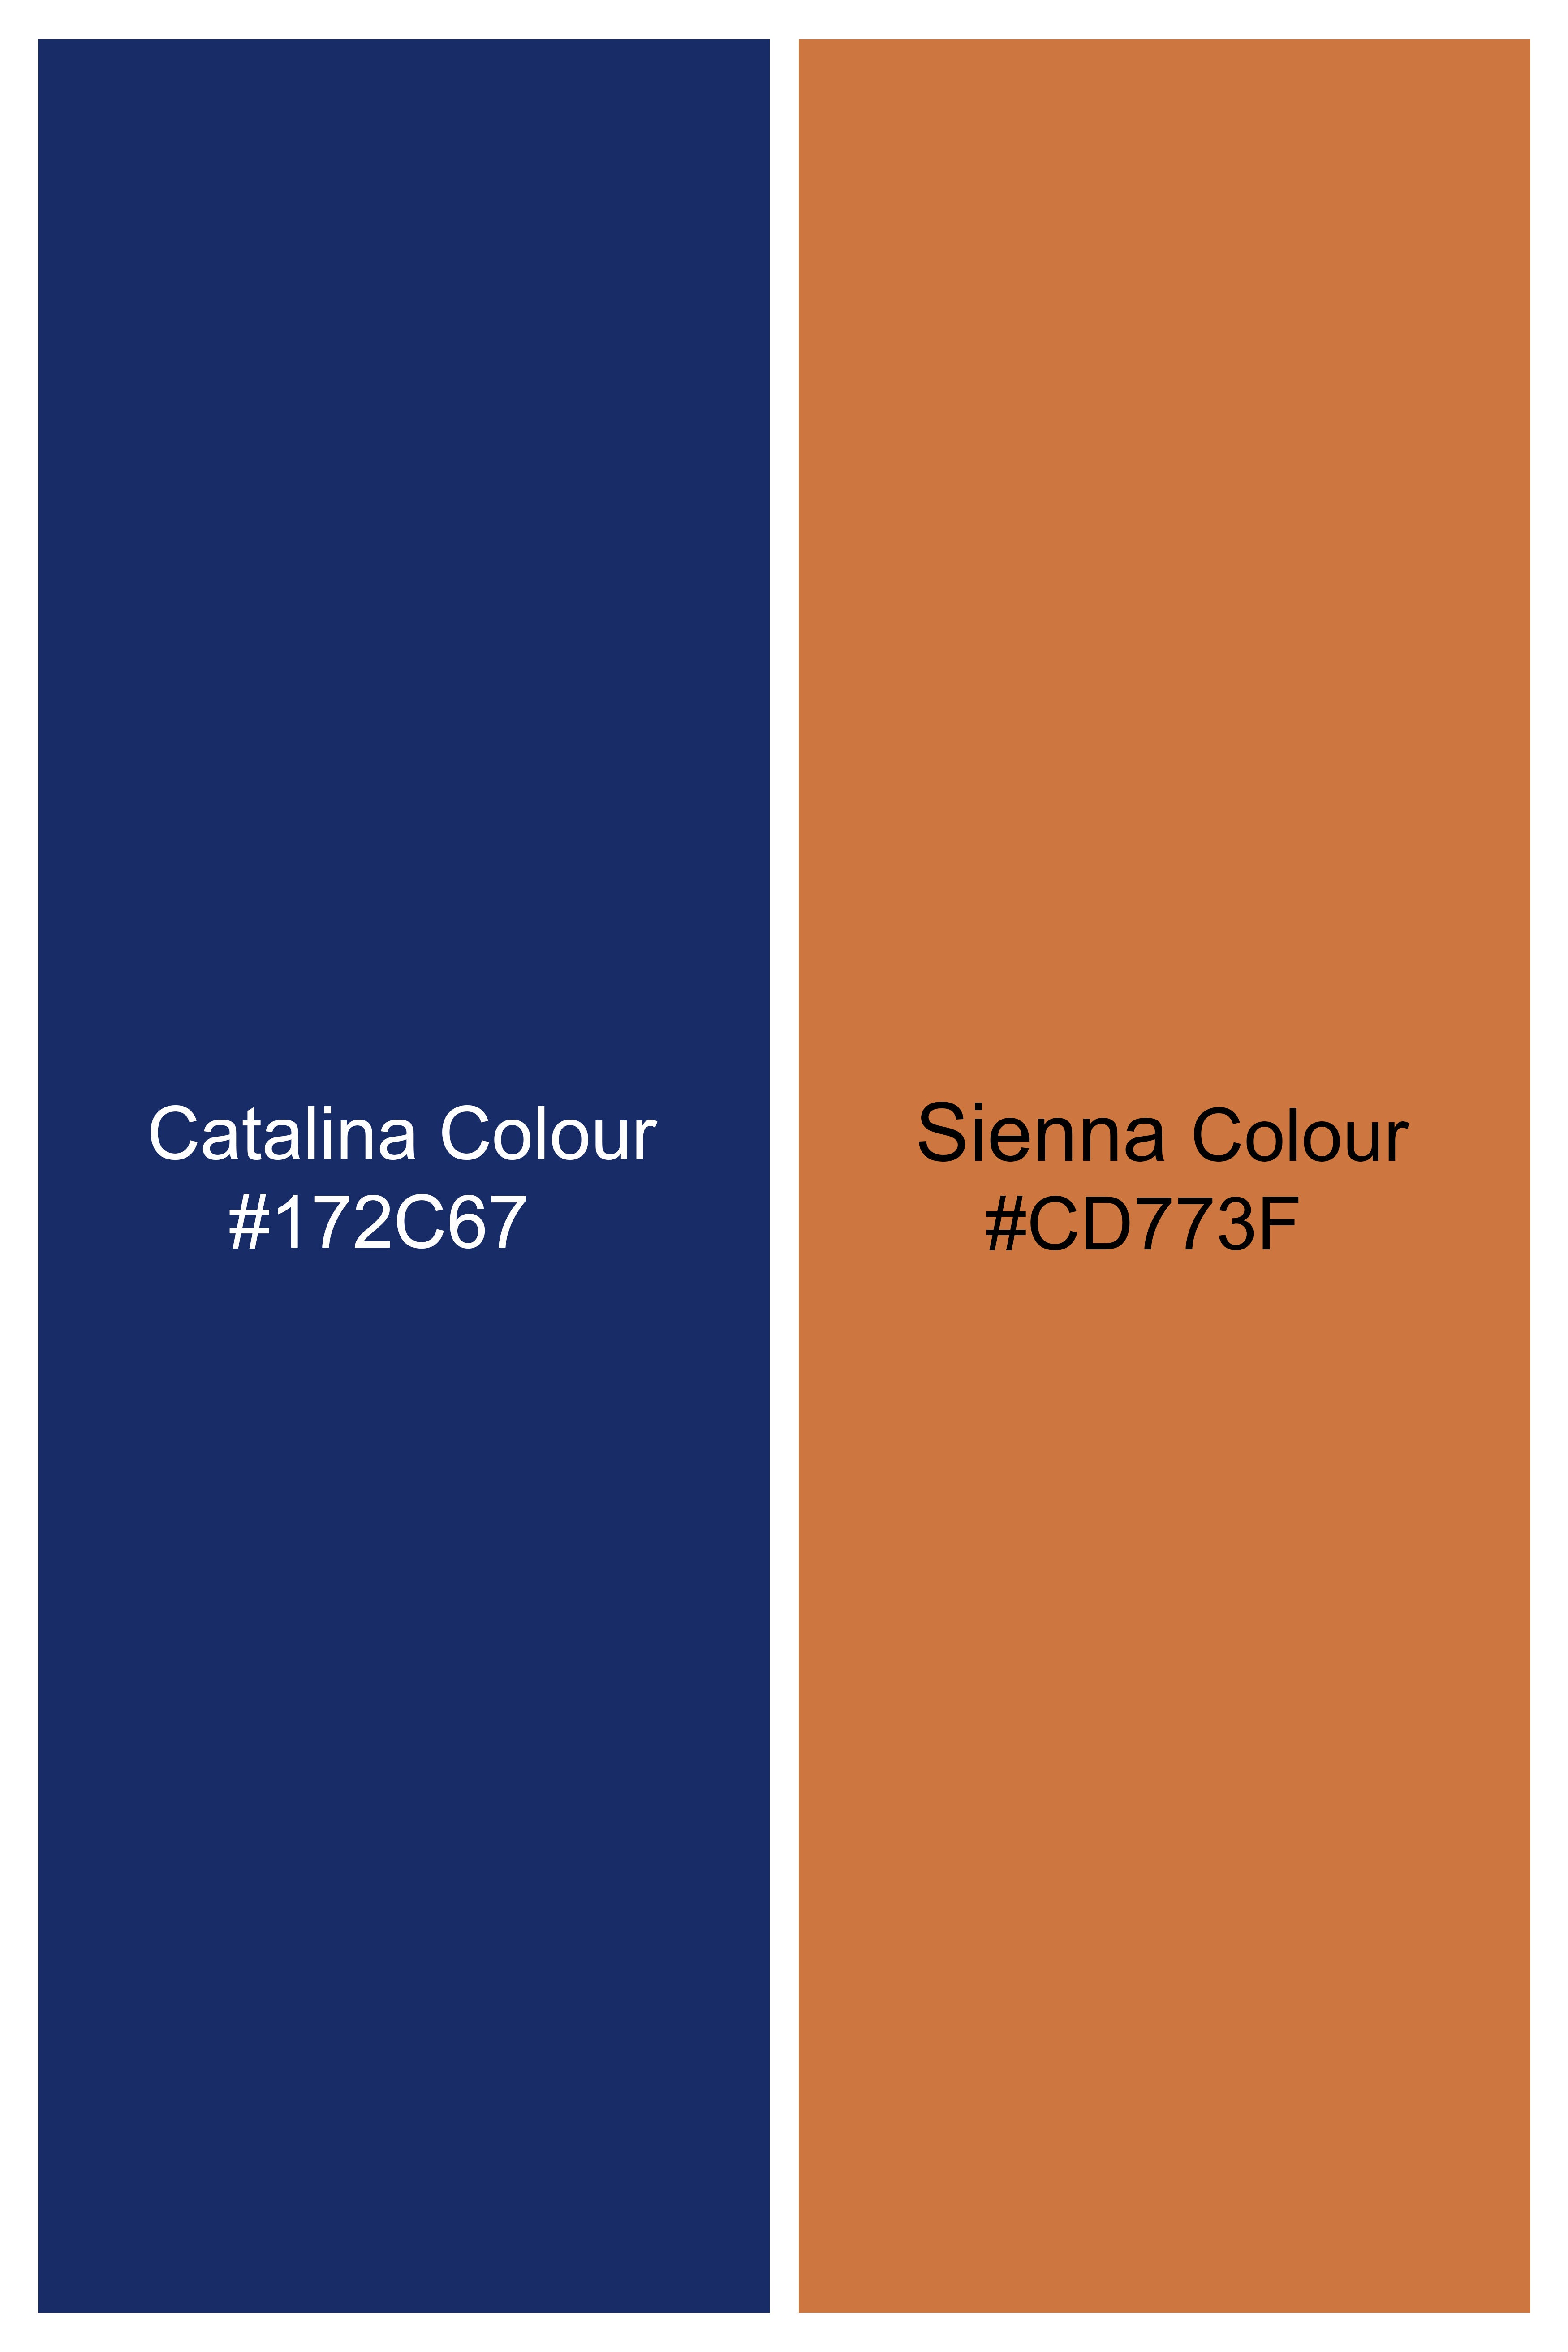 Catalina Blue and Sienna Orange Wool Rich Designer Suit ST2943-SB-D46-36,ST2943-SB-D46-38,ST2943-SB-D46-40,ST2943-SB-D46-42,ST2943-SB-D46-44,ST2943-SB-D46-46,ST2943-SB-D46-48,ST2943-SB-D46-50,ST2943-SB-D46-52,ST2943-SB-D46-54,ST2943-SB-D46-56,ST2943-SB-D46-58,ST2943-SB-D46-60